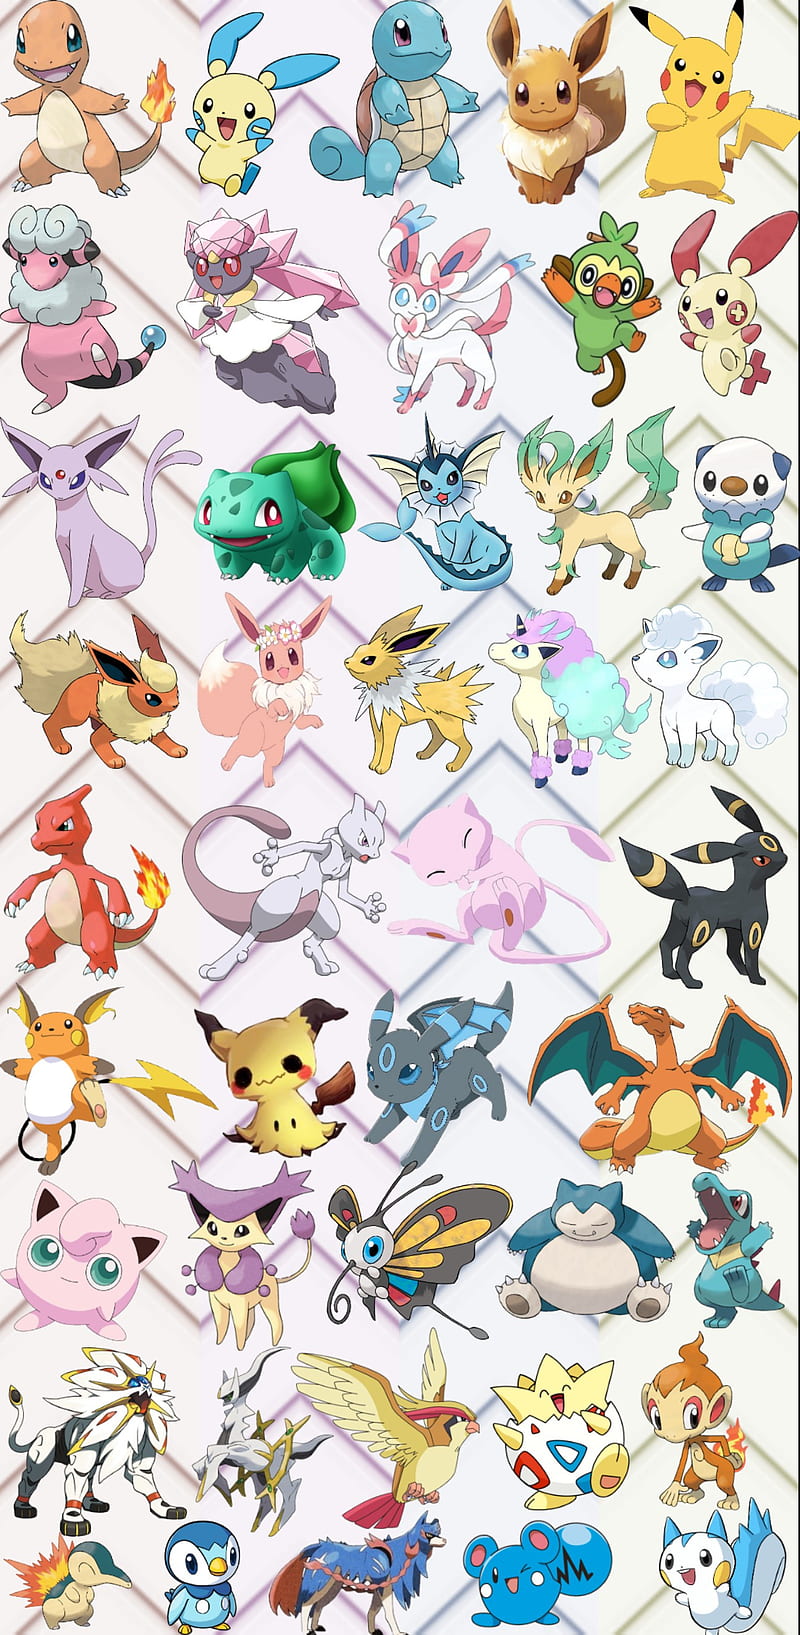 9900+] Pokemon Wallpapers